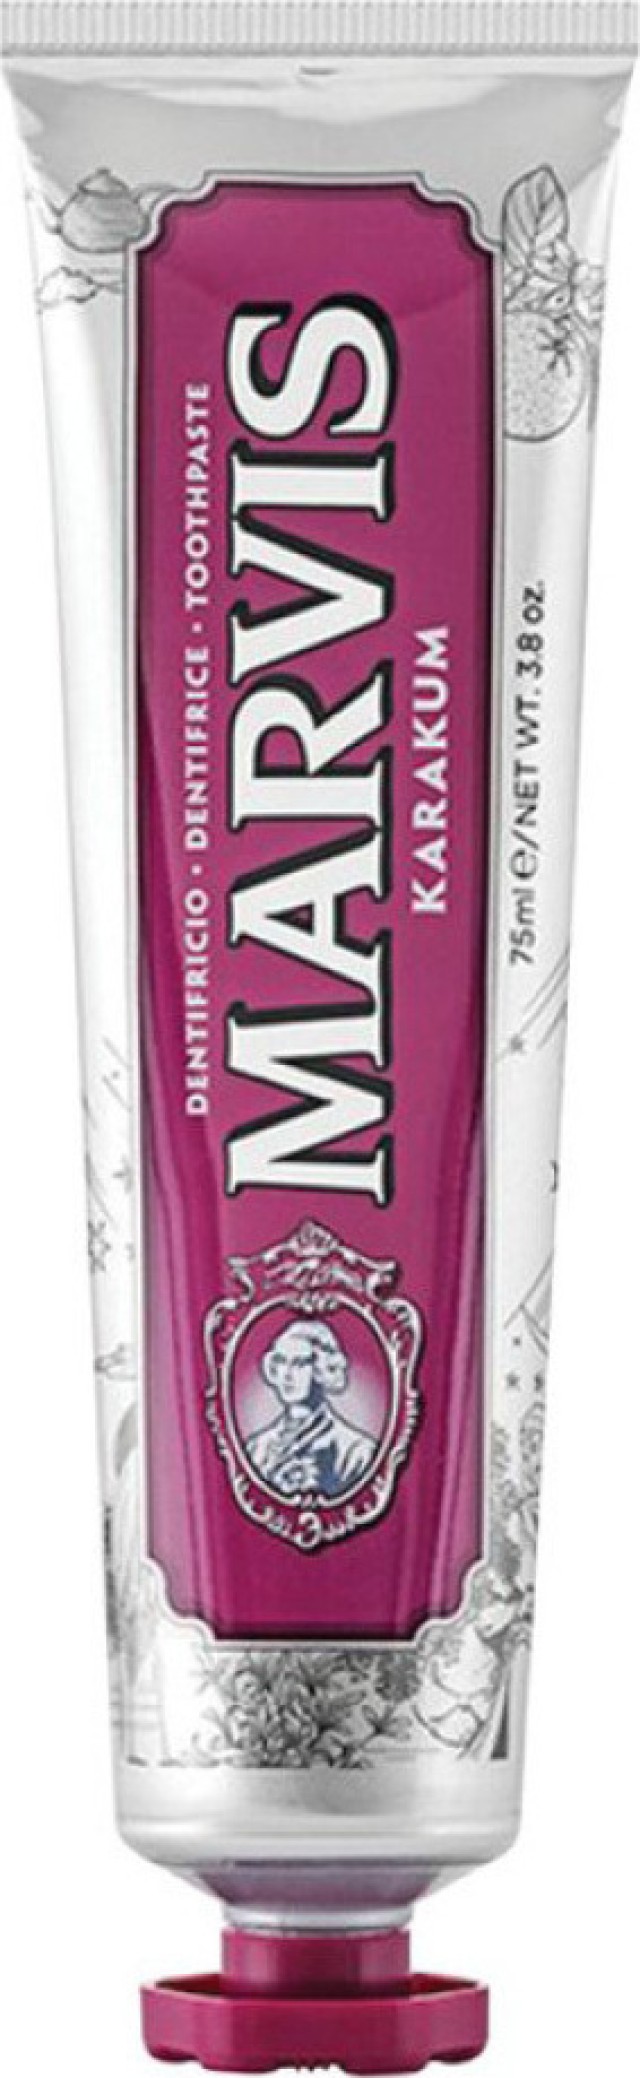 Marvis Karakum Limited Edition Exotic Spicy Flavours Οδοντόκρεμα 75ml